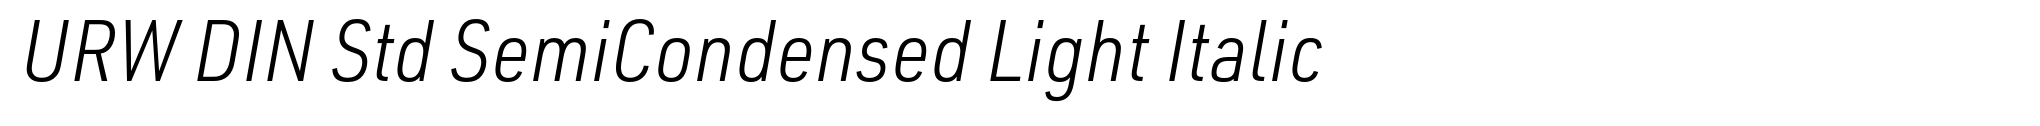 URW DIN Std SemiCondensed Light Italic image